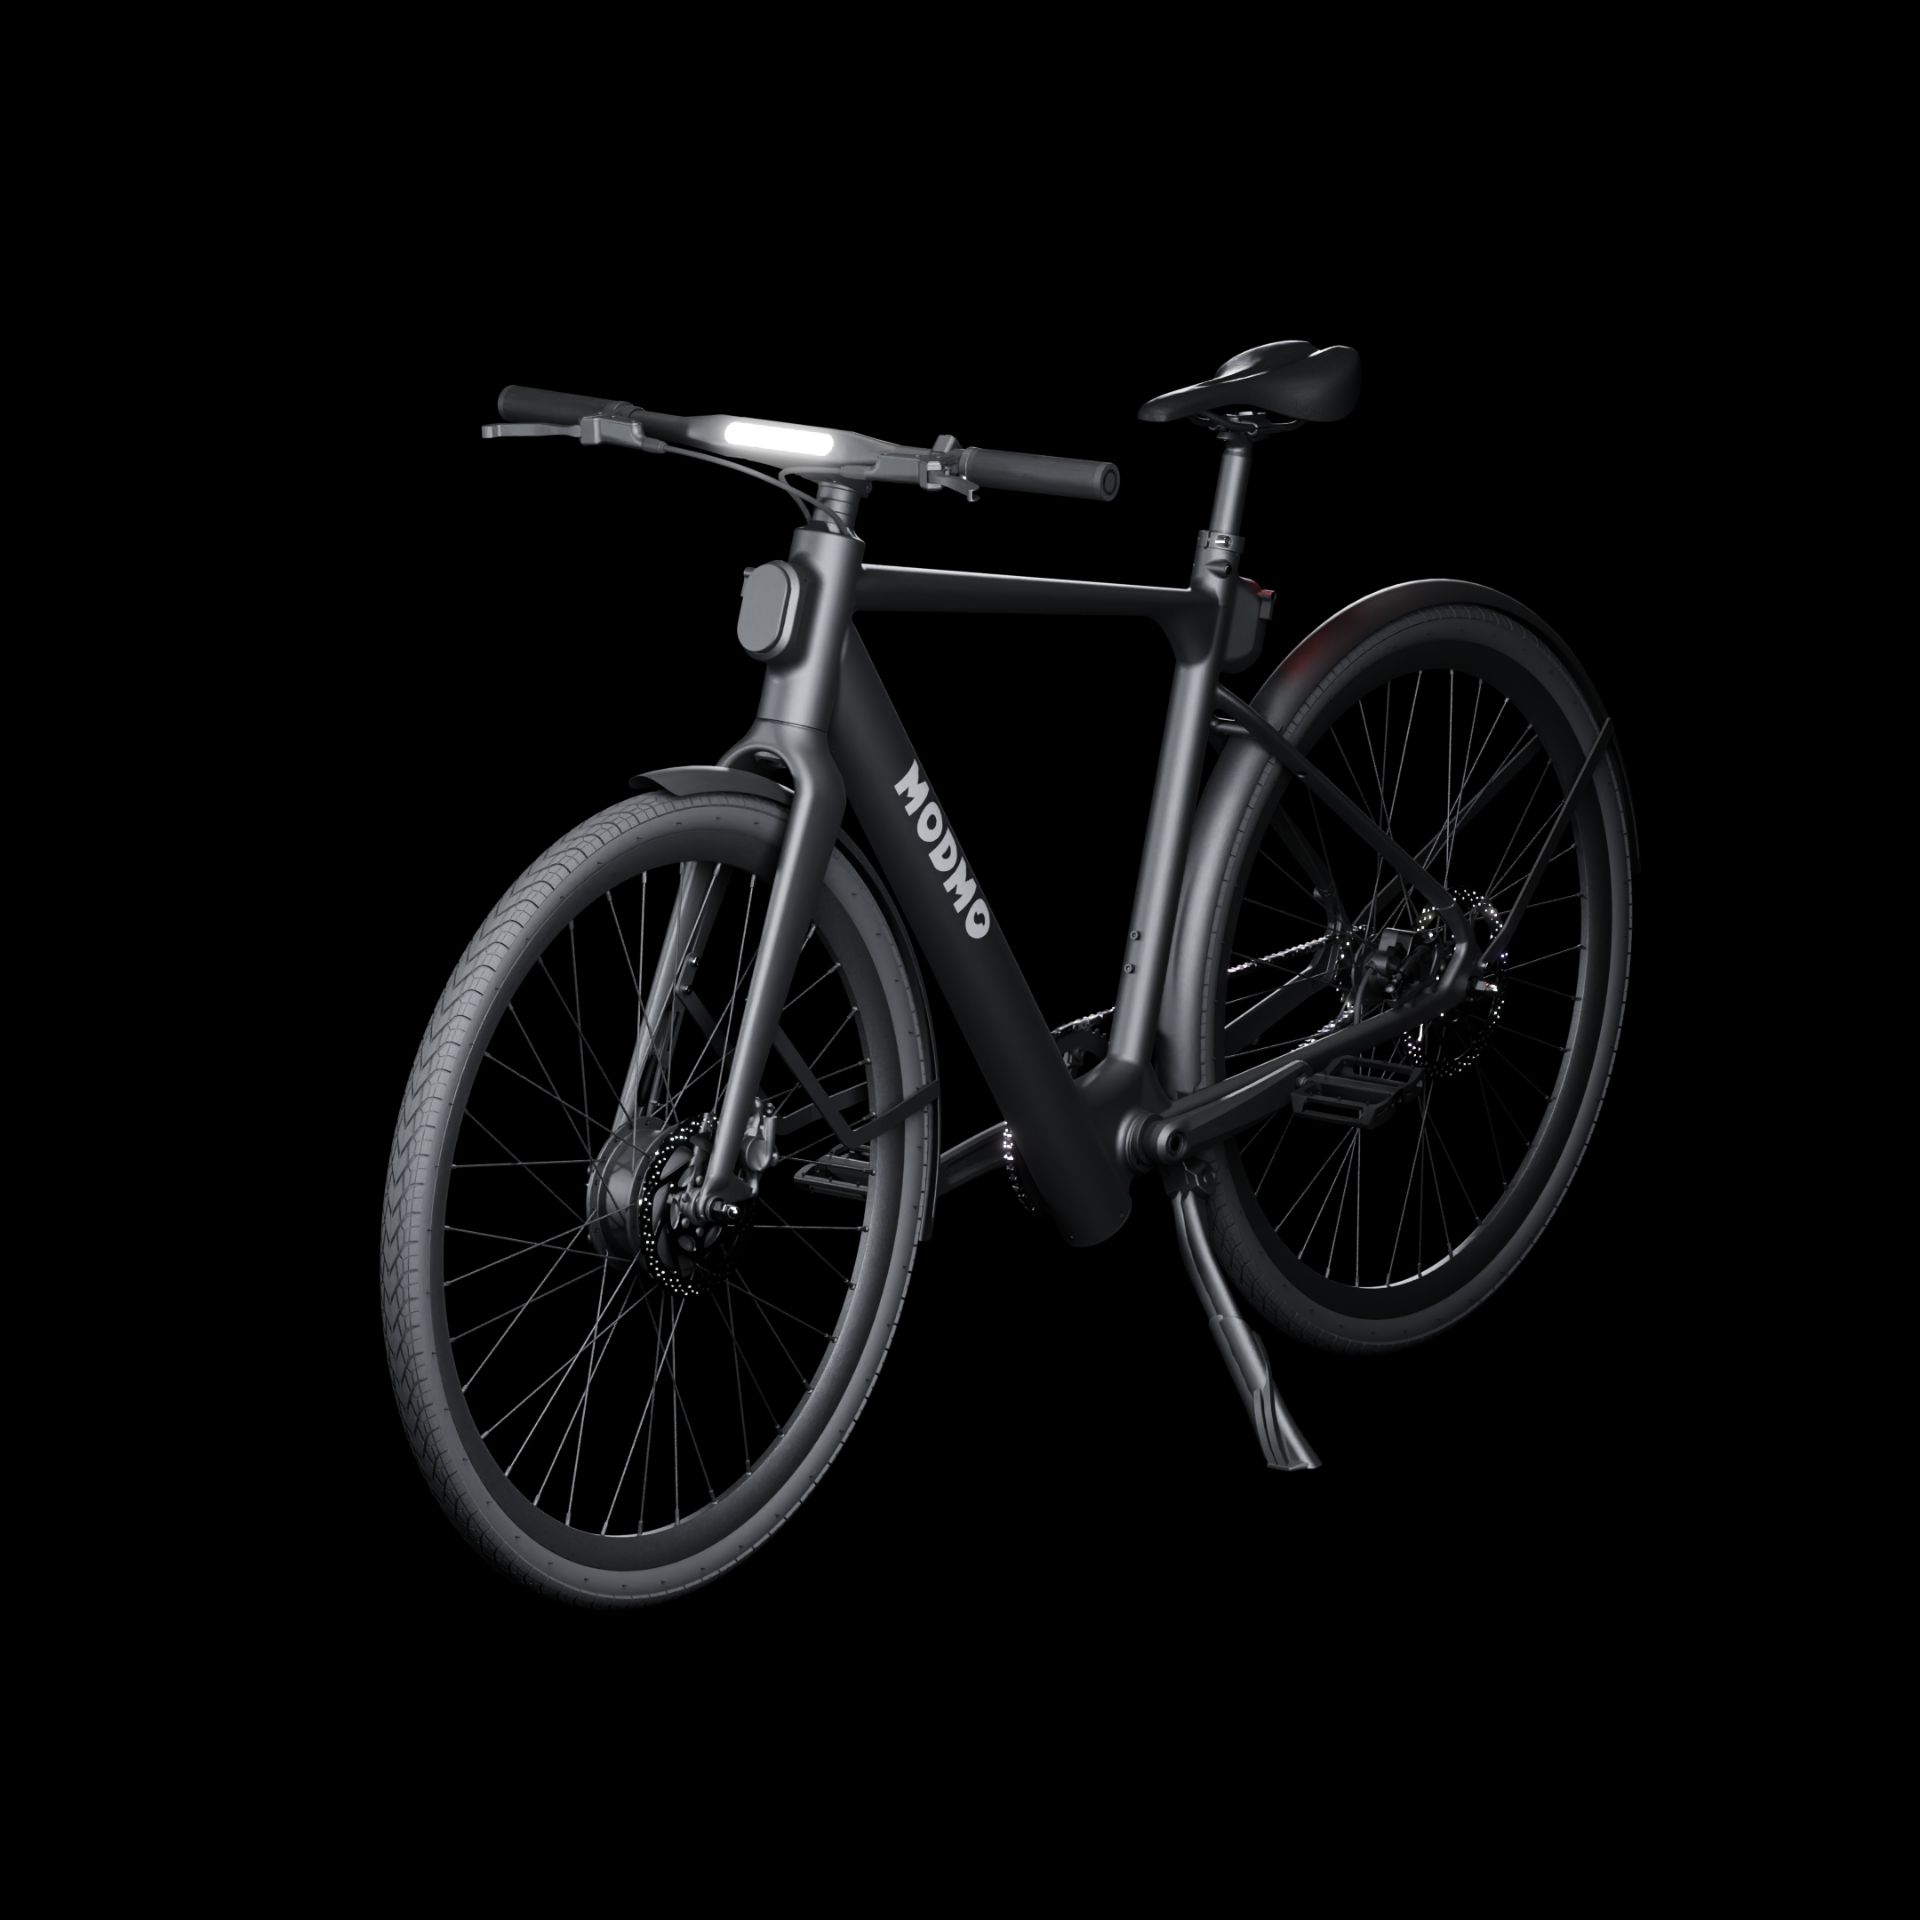 Modmo Saigon+ Electric Bicycle - RRP £2800 - Size M (Rider: 155-175cm) - Image 9 of 19